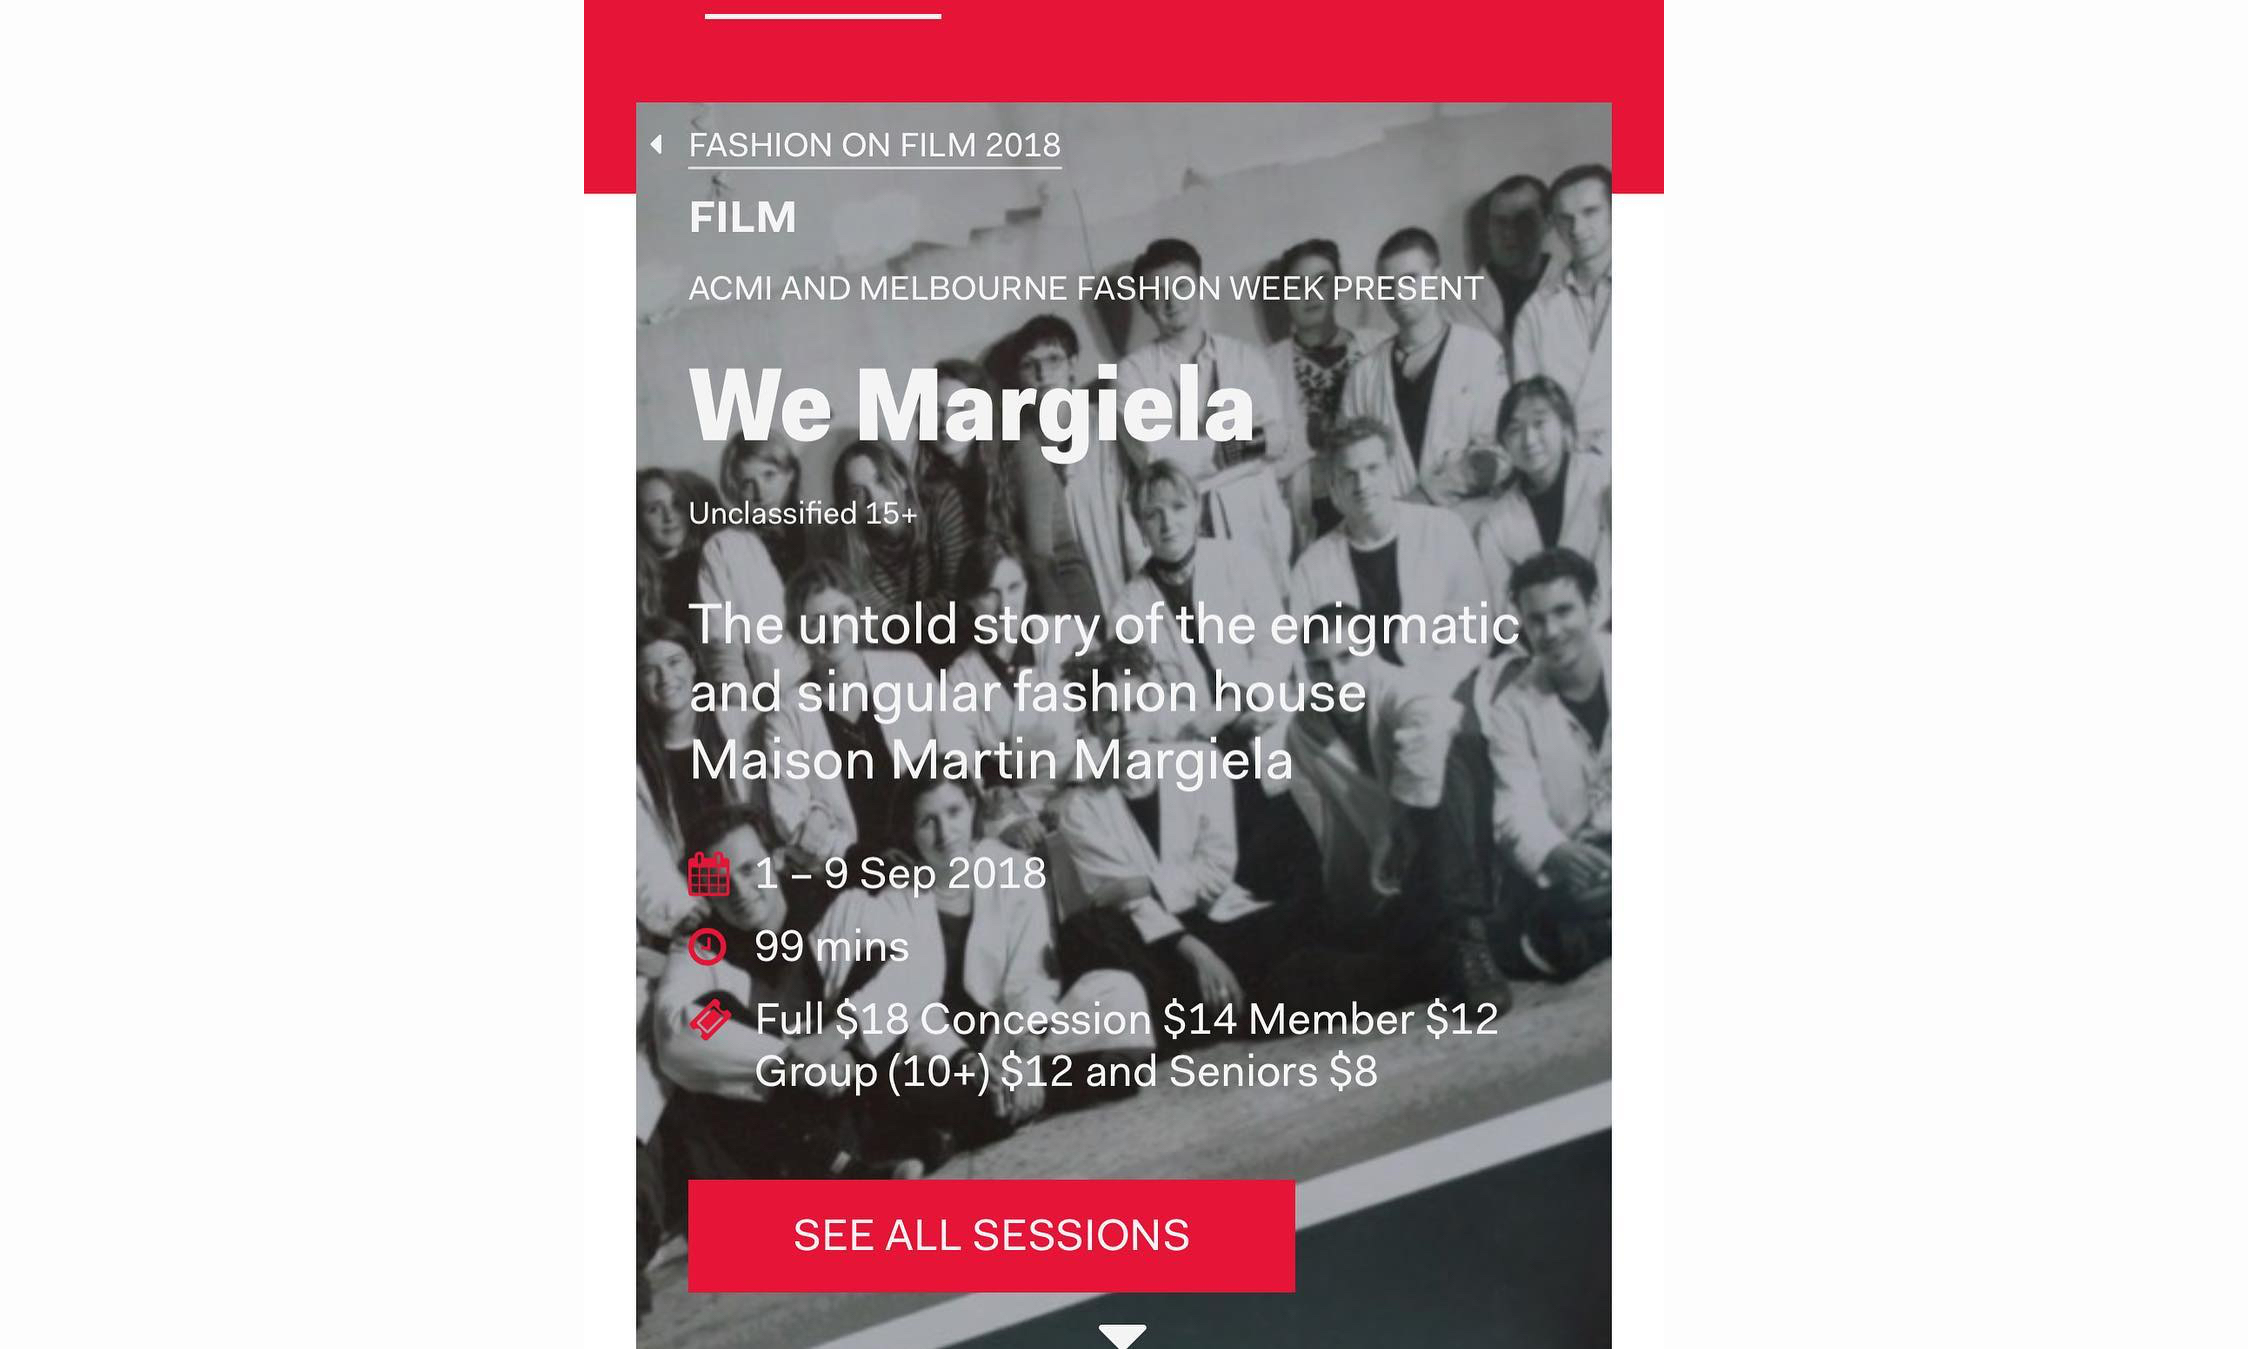 《We Margiela》即将于 9 月在墨尔本时装周上映